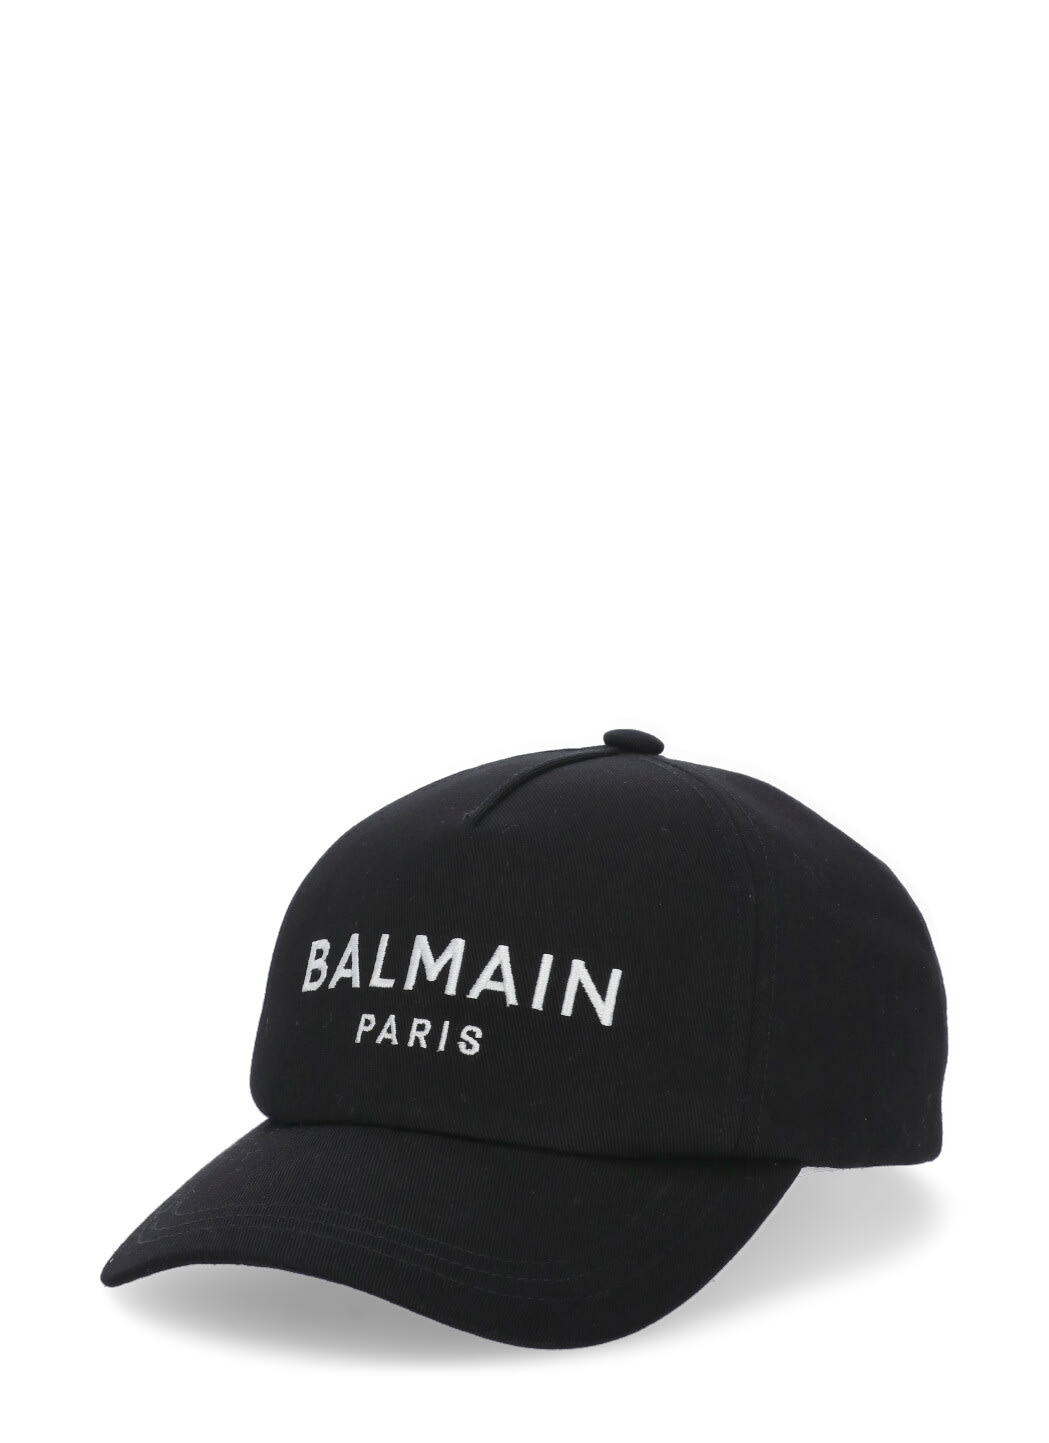 BALMAIN Hats for Women | ModeSens